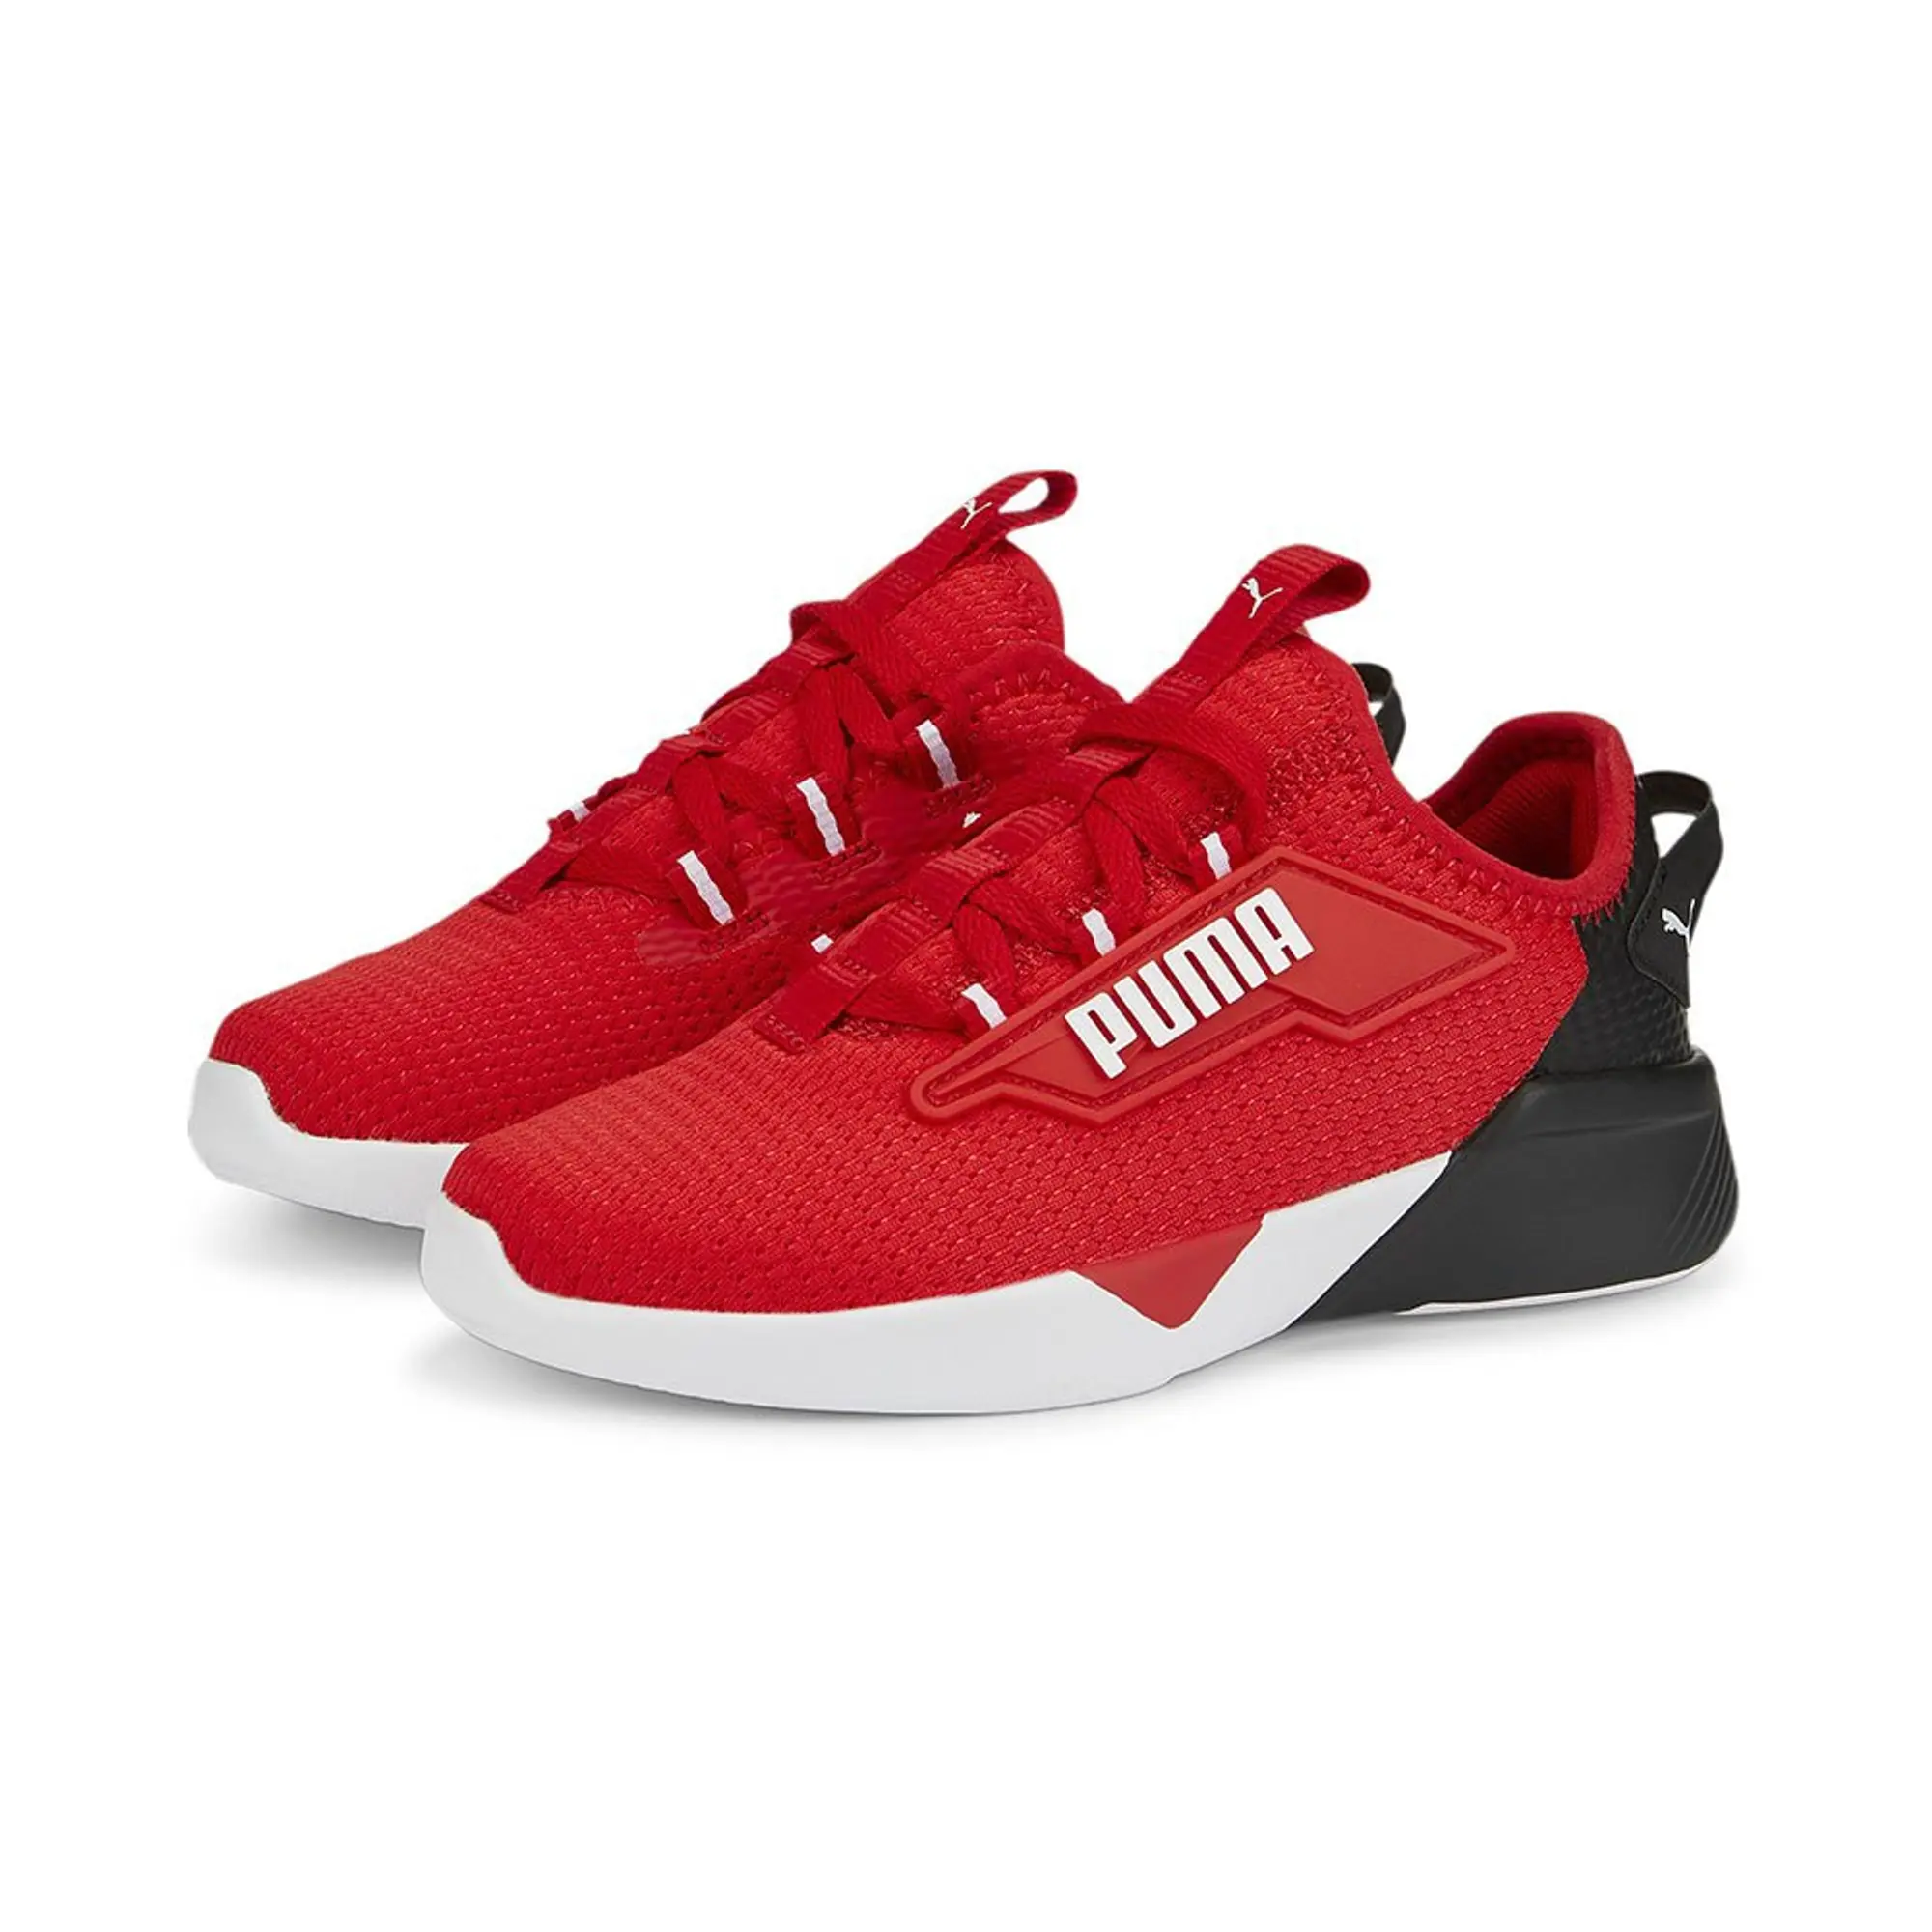 Puma Childrens Unisex Retaliate 2 Kids Sneakers - Red